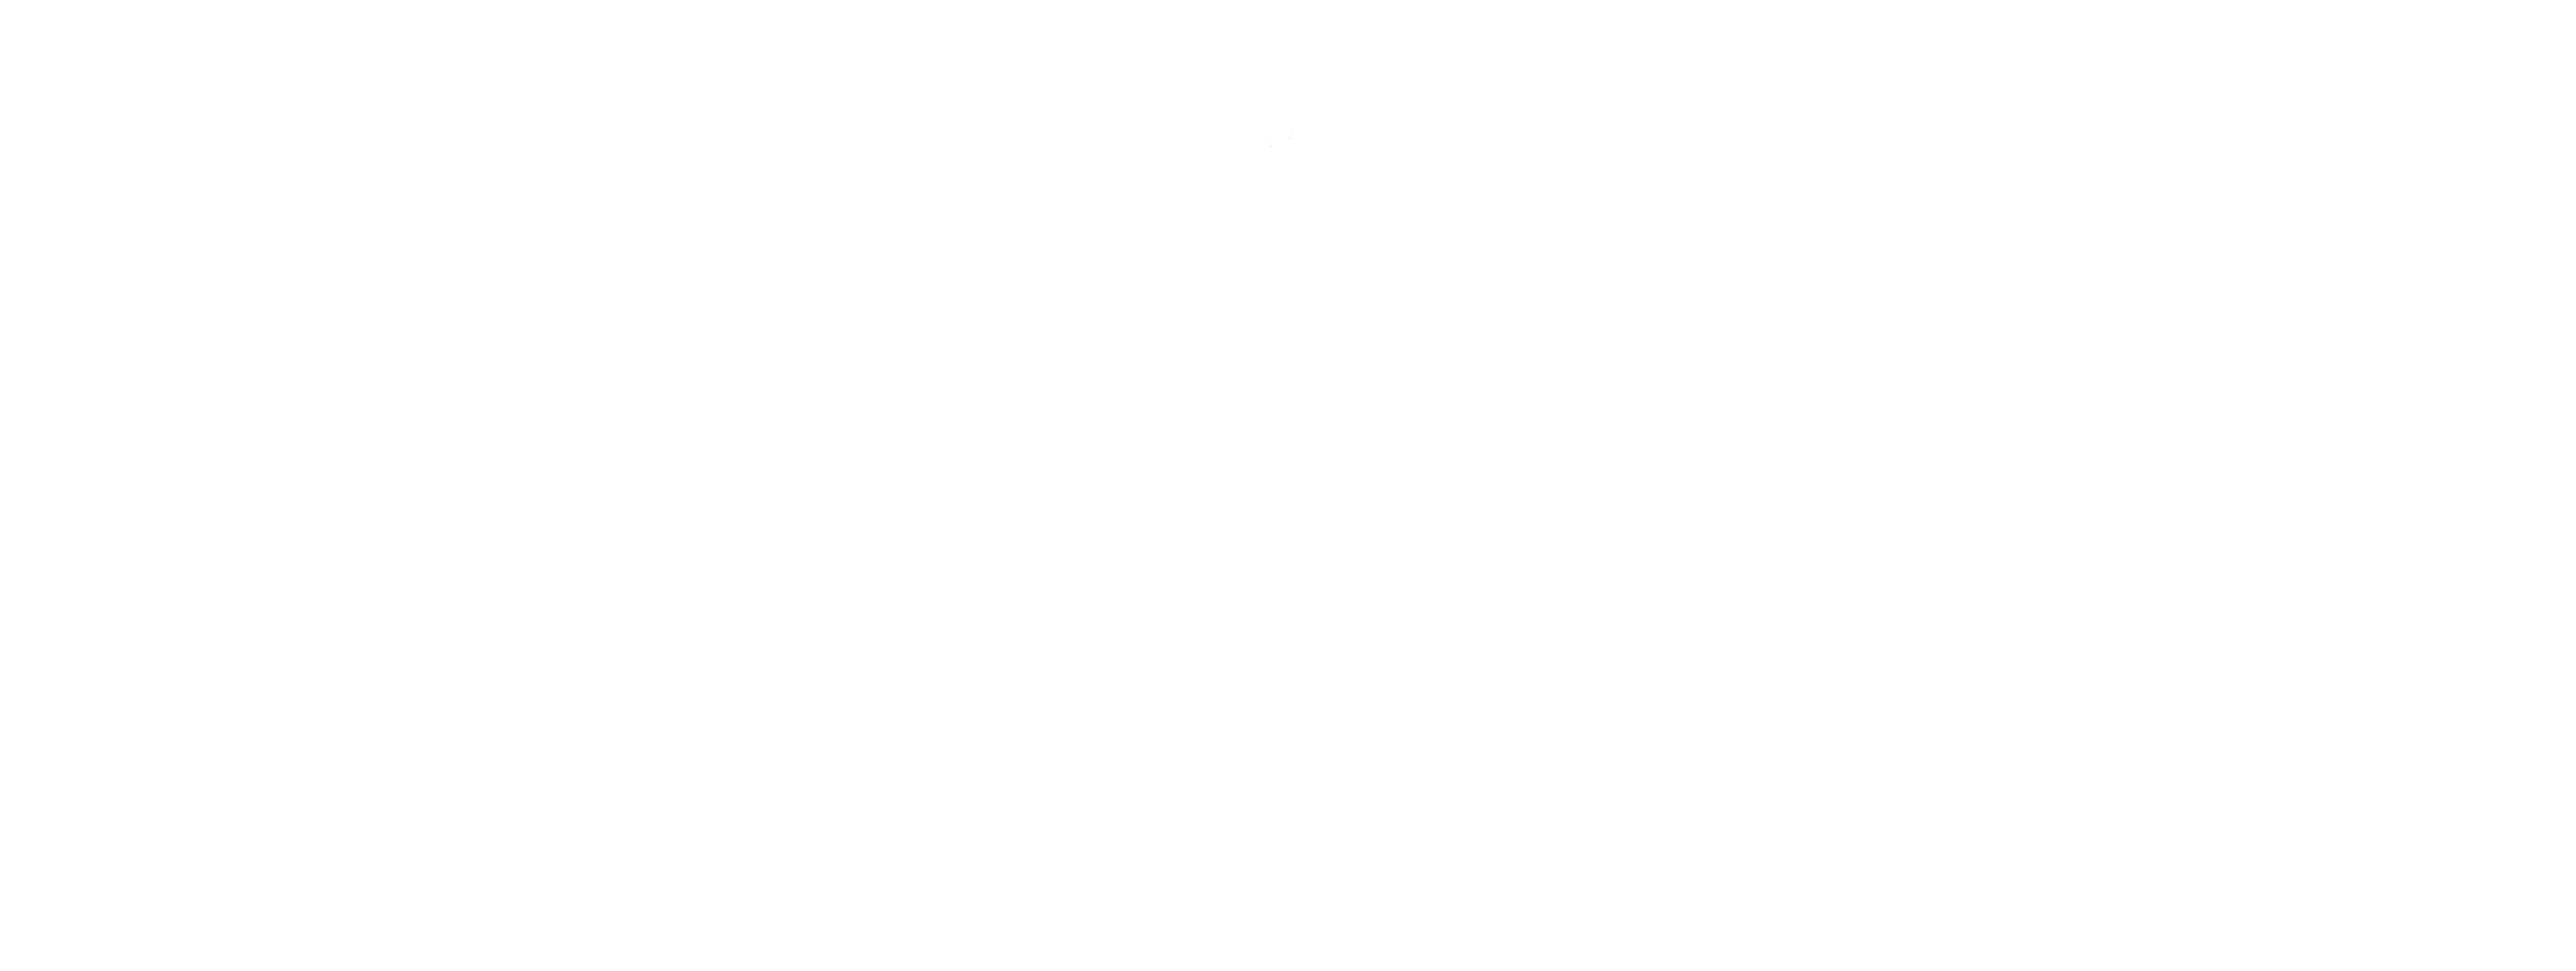 JUDr. Michaela Gebrlínová - Advokát